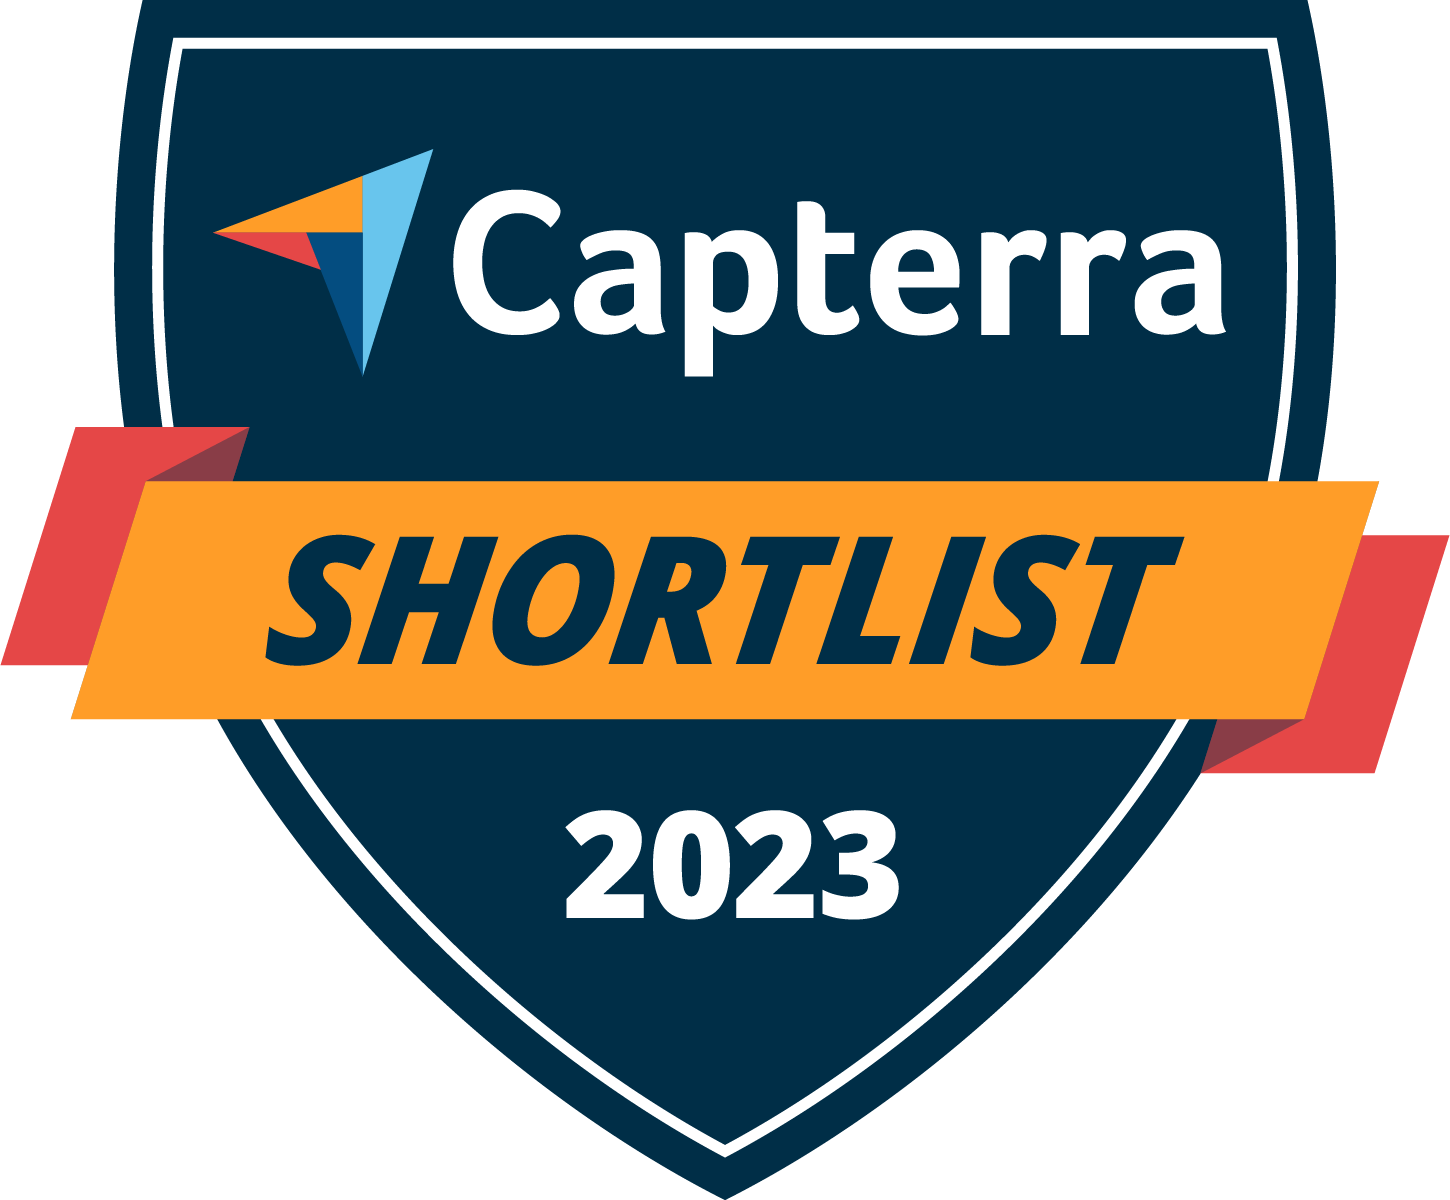 Capterra Shortlist 2022 badge